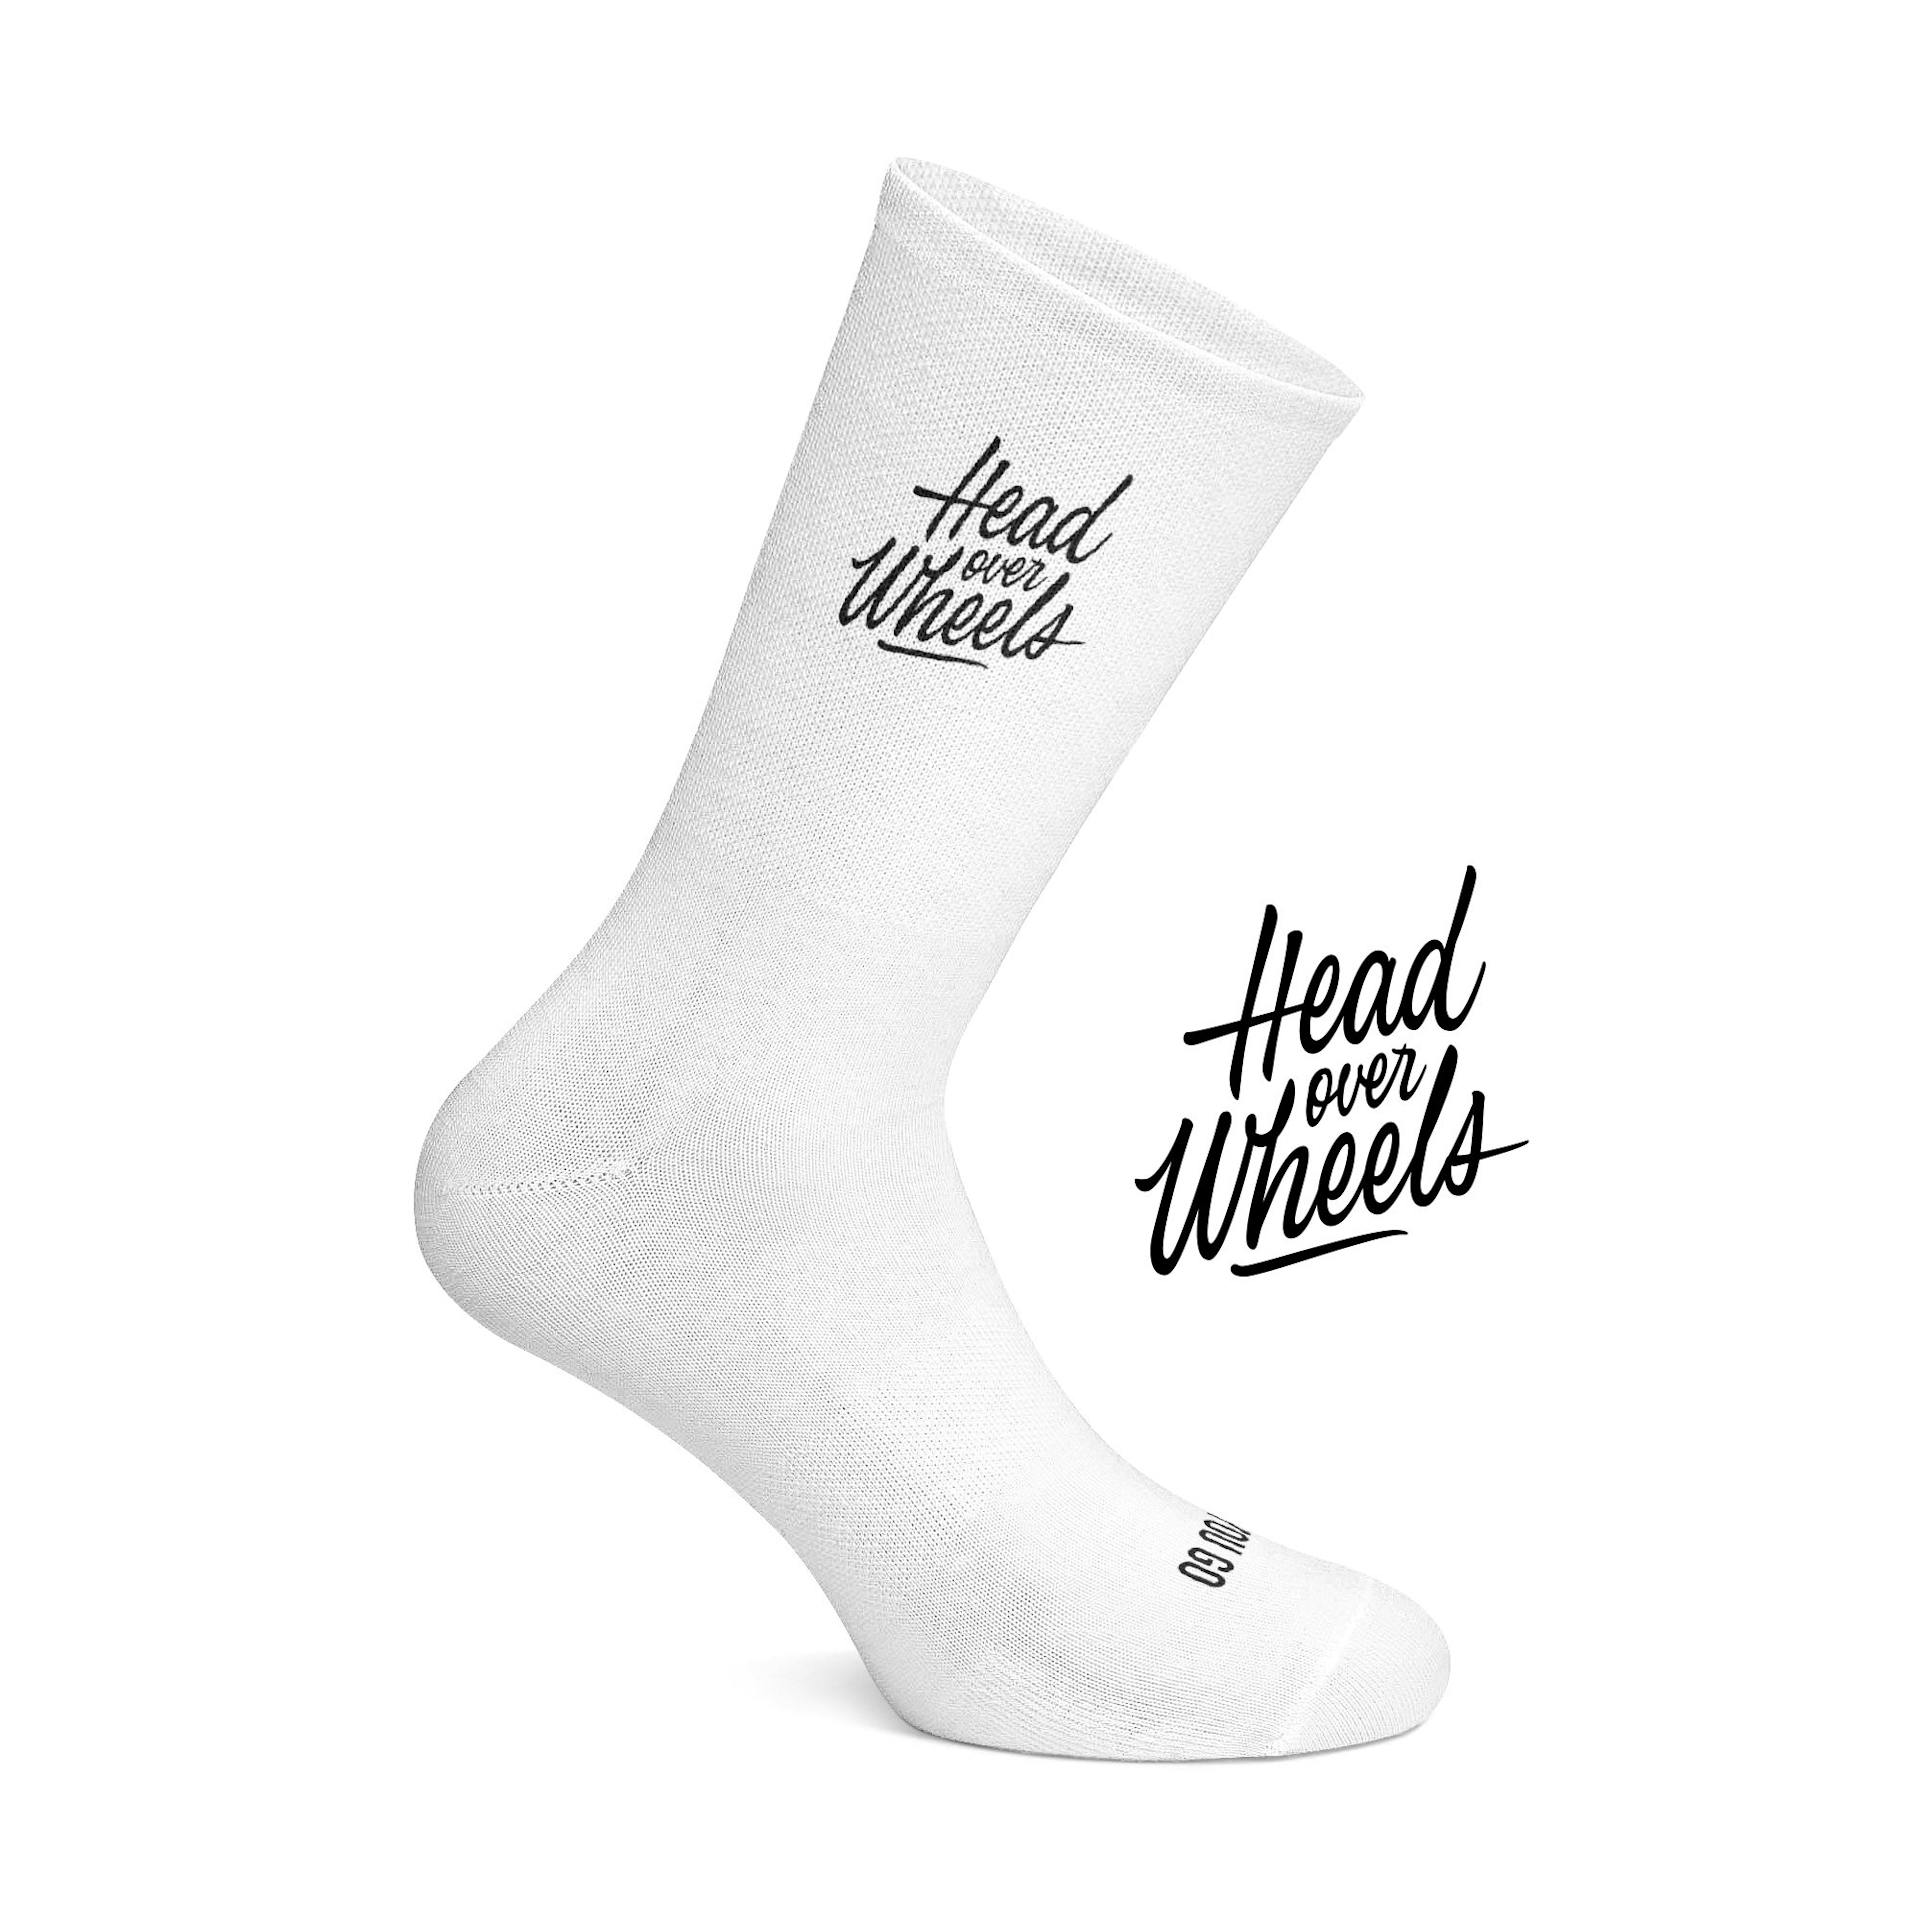 Head over Wheels cycling socks White